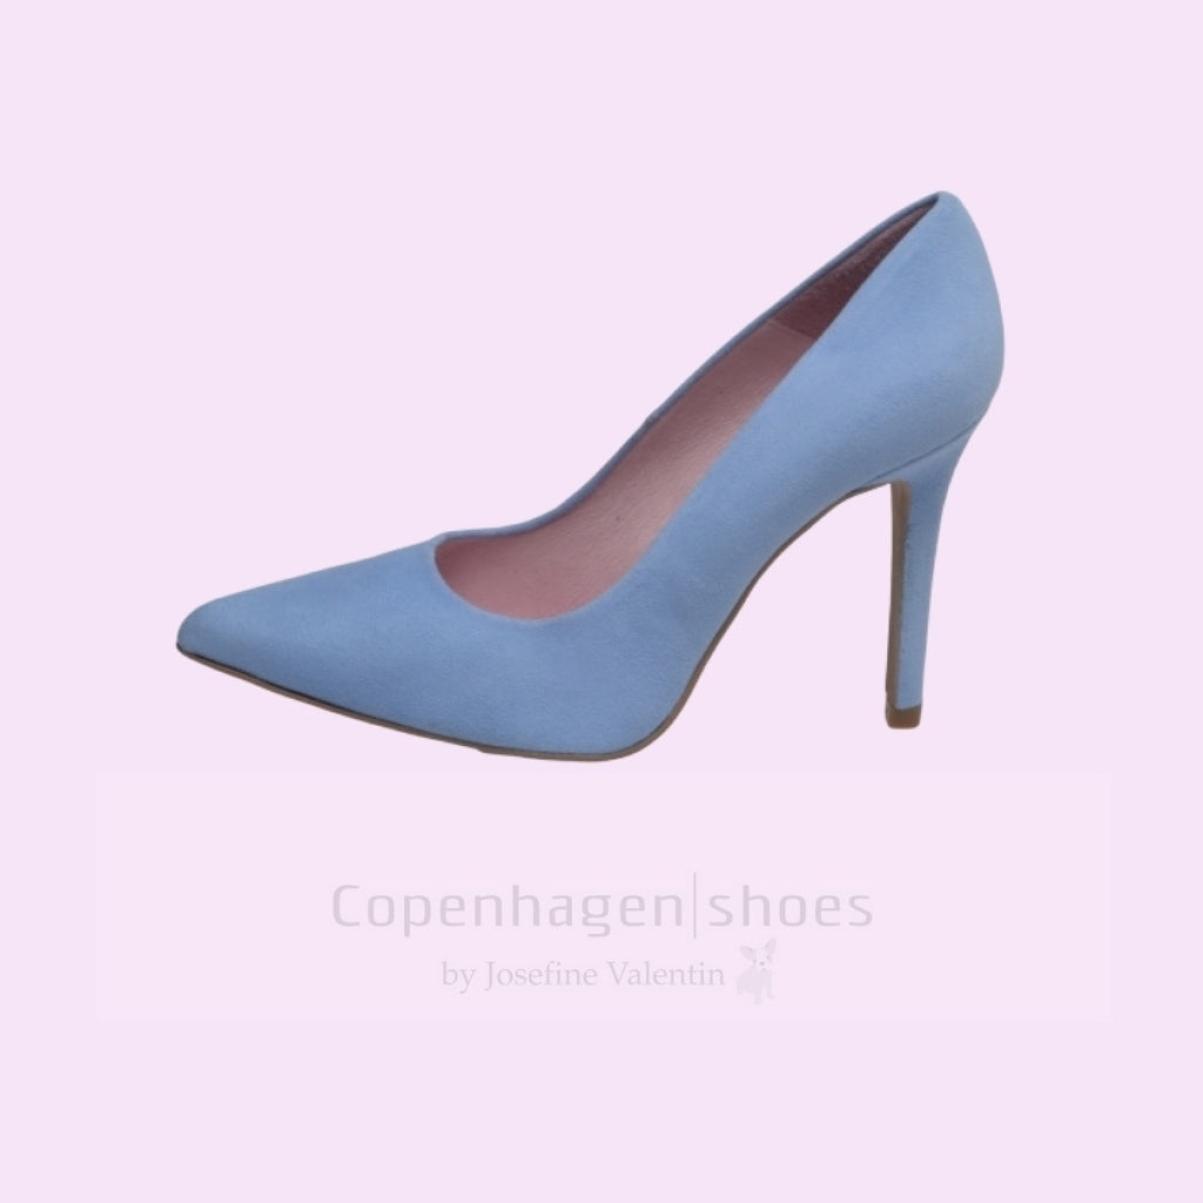 Trendy Women Stilettos & High Heels Sky- Copenhagenshoes By Josefine Valentin - Baby Blue Copenhagen Shoes